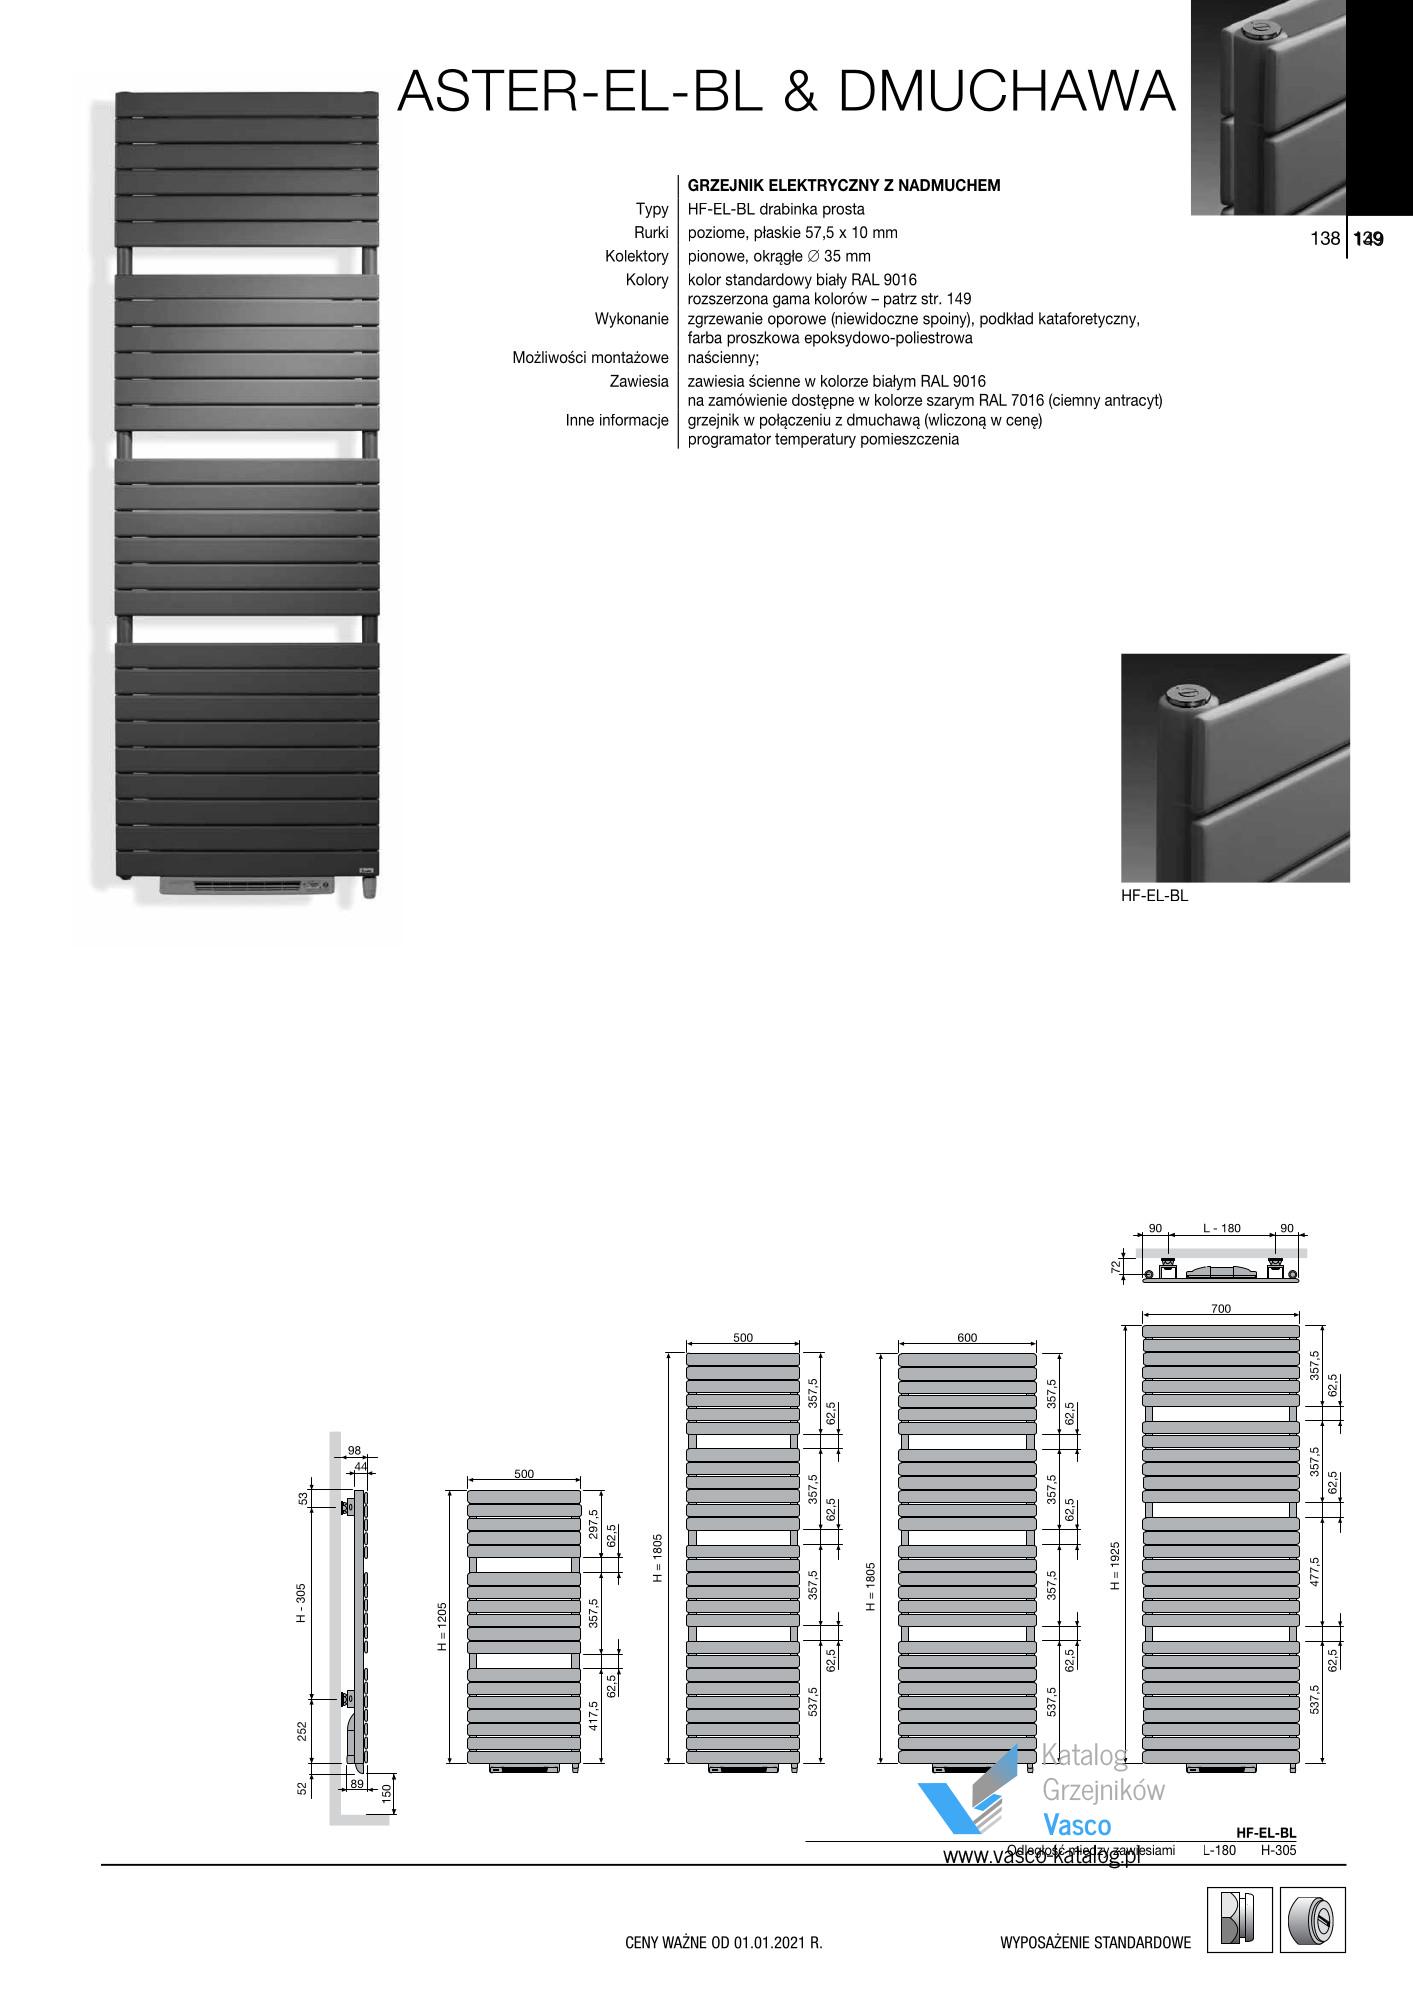 Katalog Vasco 2021 - Aster-EL-BL & Dmuchawa